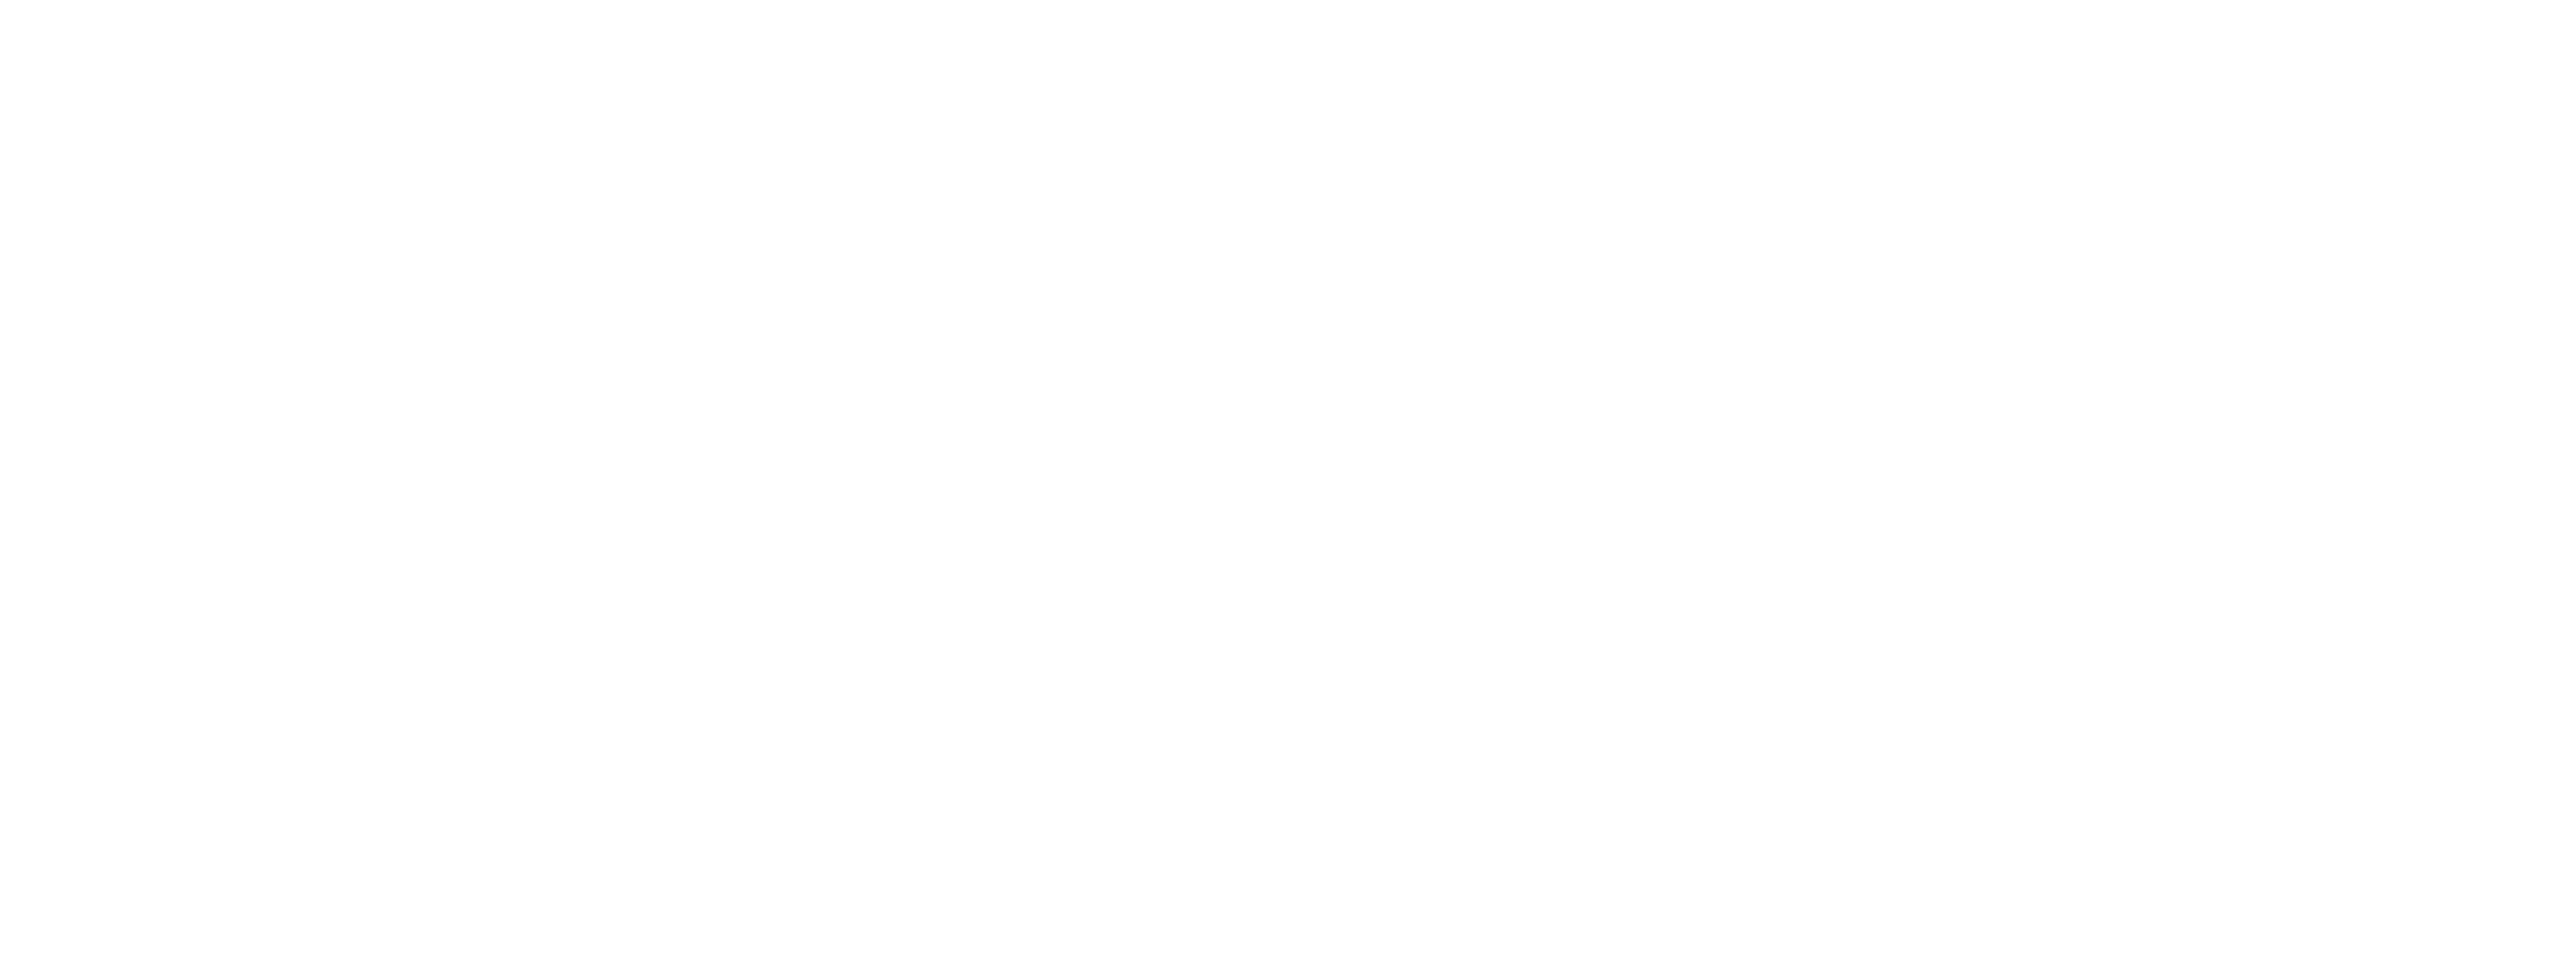 aptLearn logo